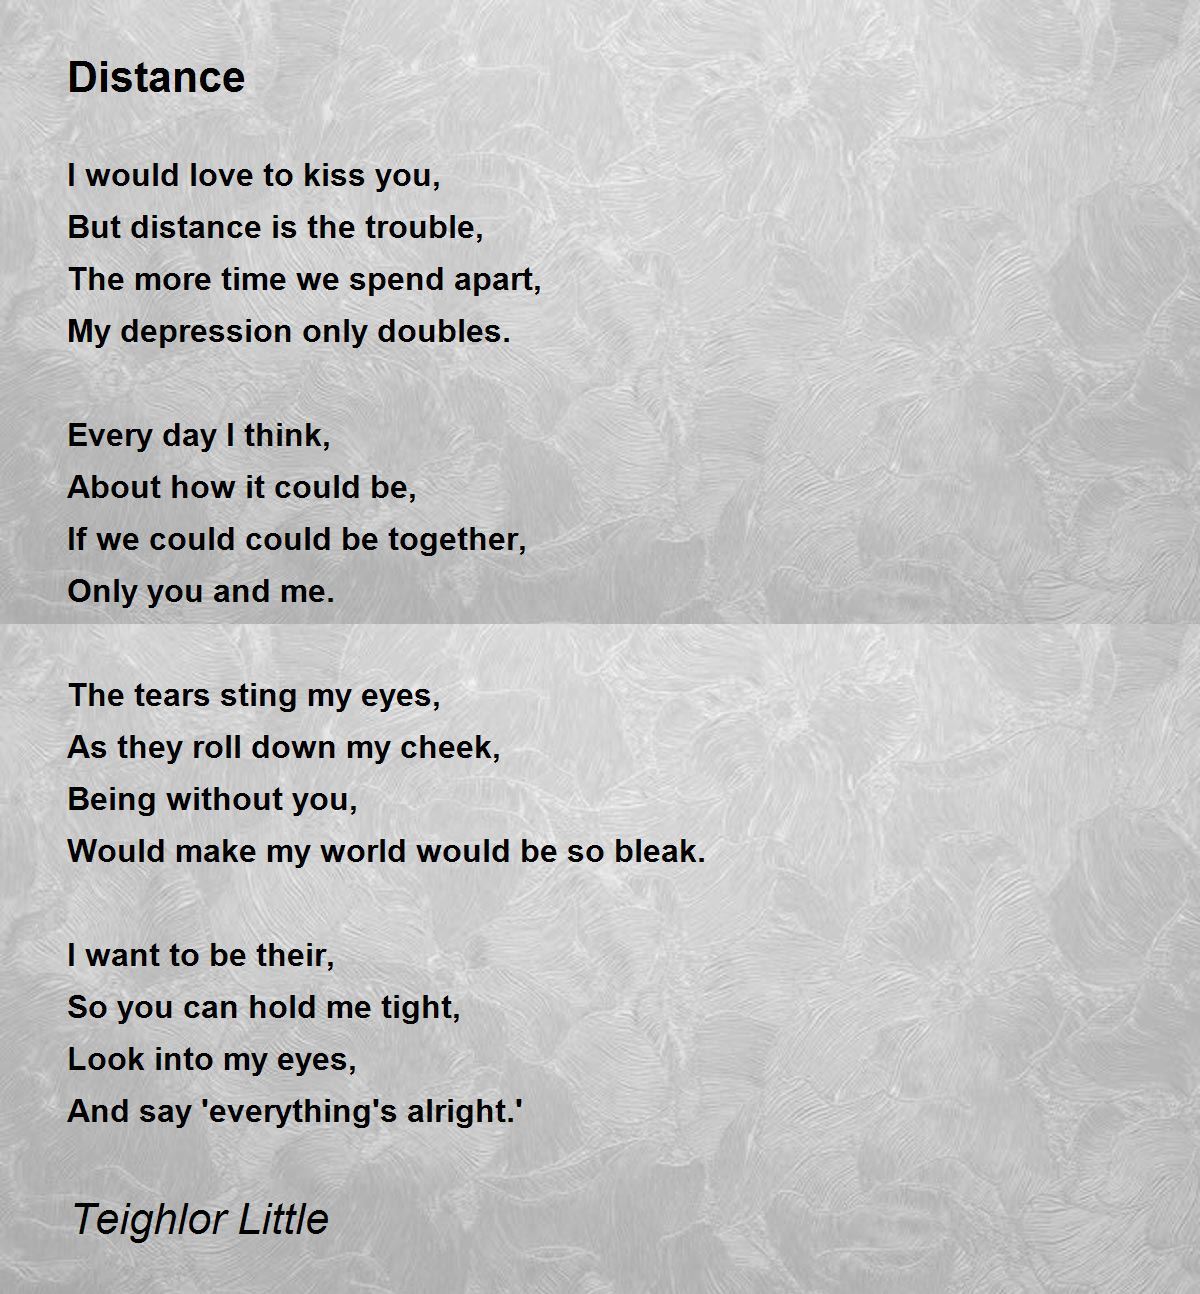 Bachdenkel – The Slightest Distance Lyrics